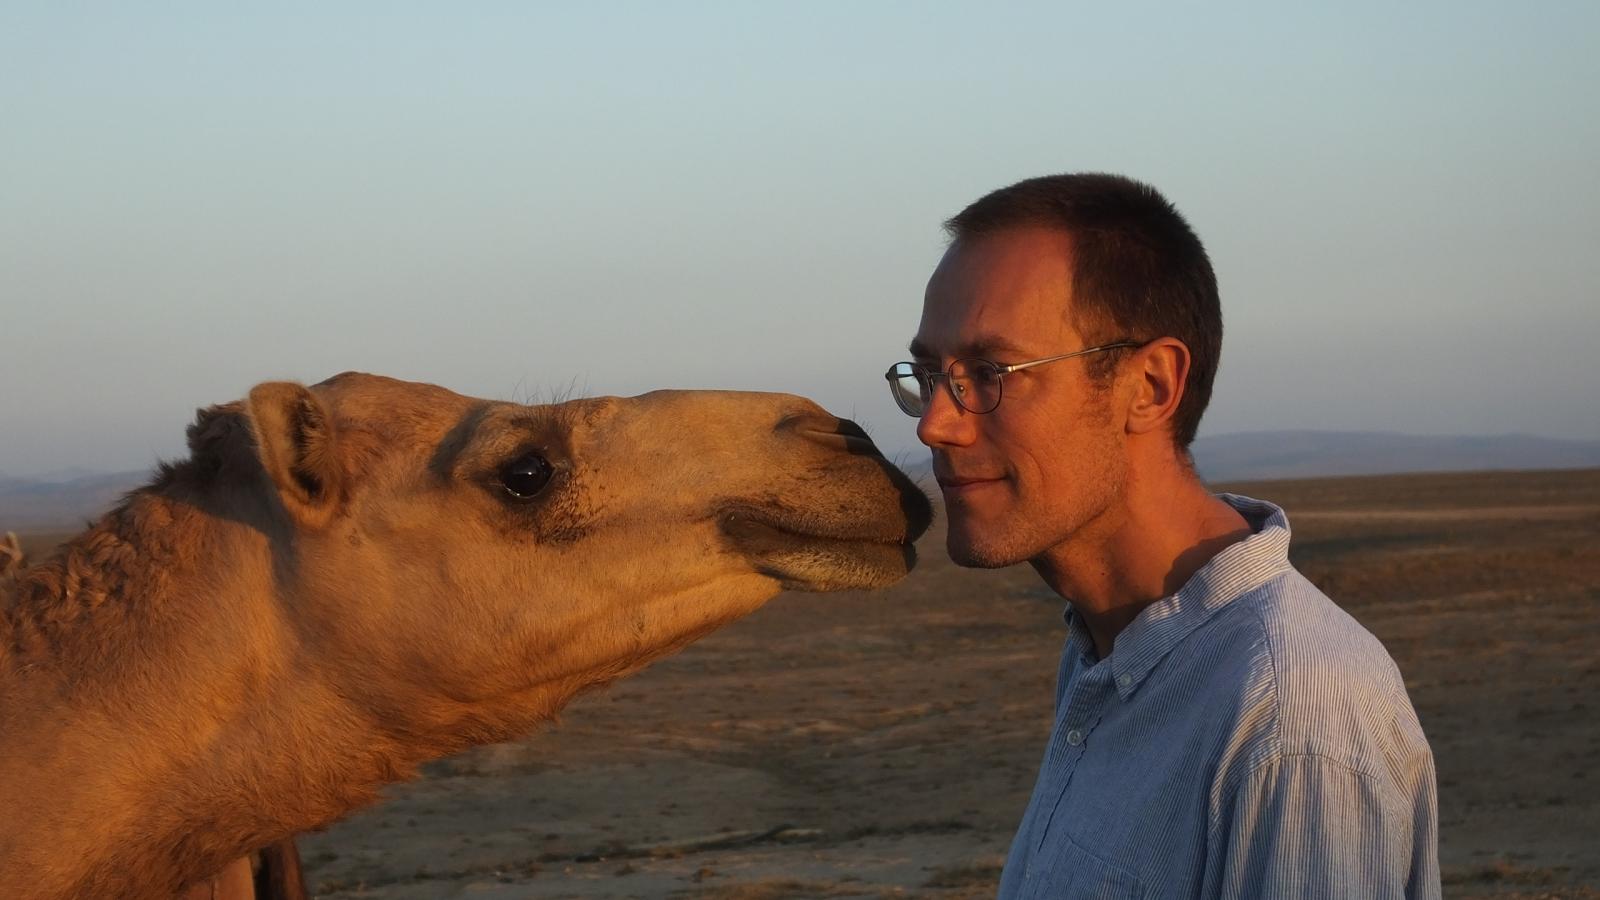 Mark Moritz (on the right) in Dhofar, Oman.